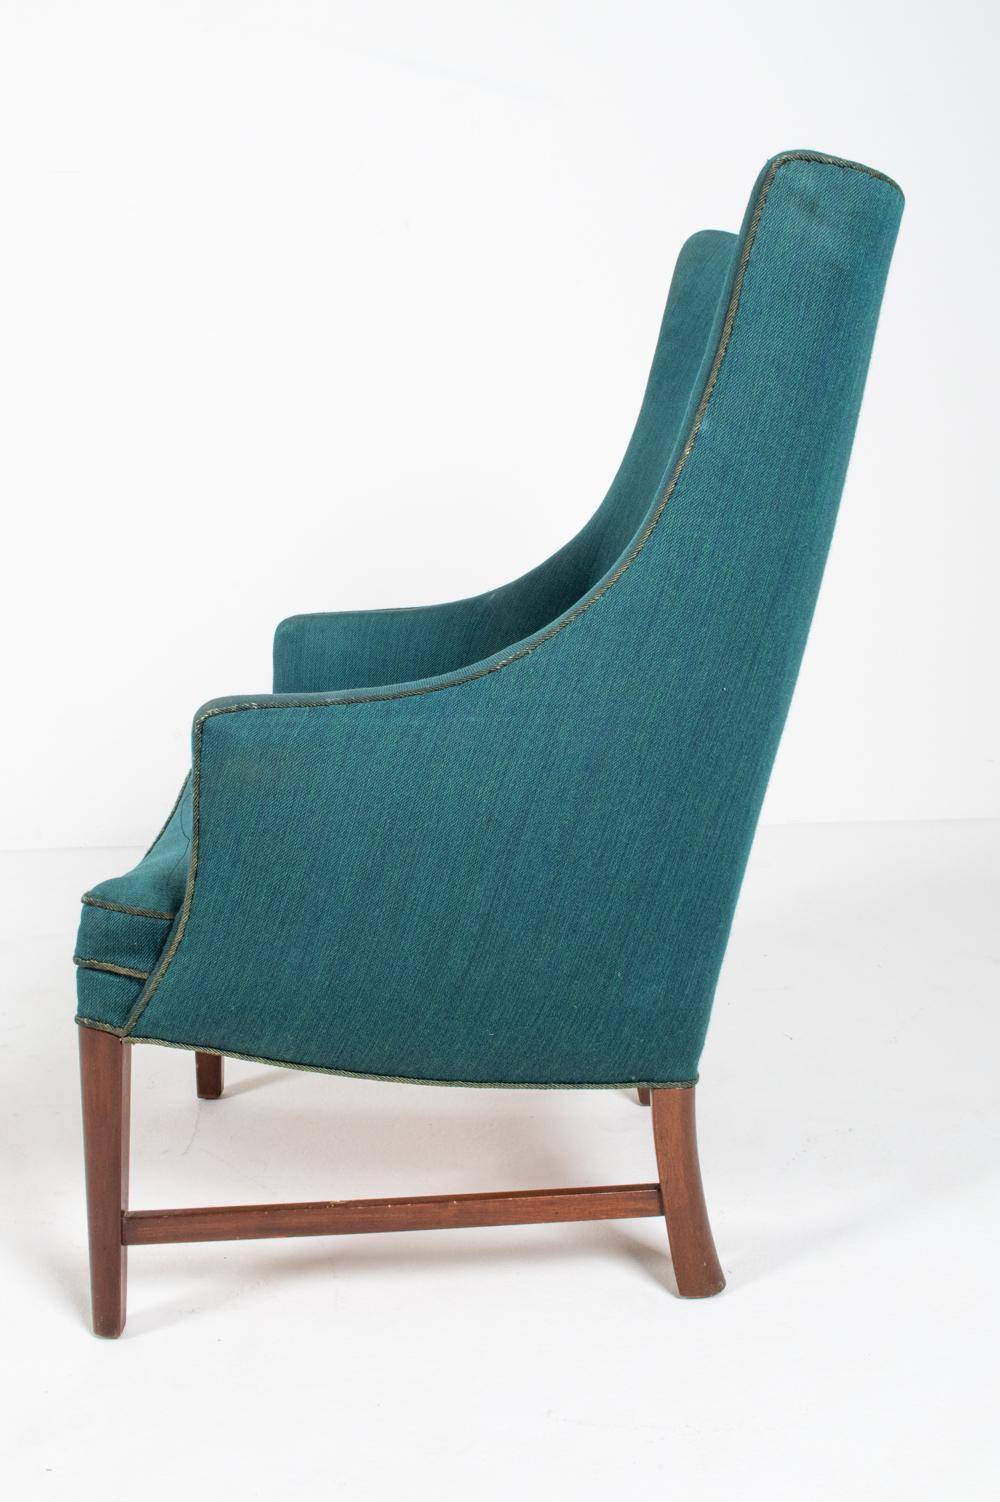 Frits Henningsen Danish Highback Lounge Chair, c. 1940's For Sale 6